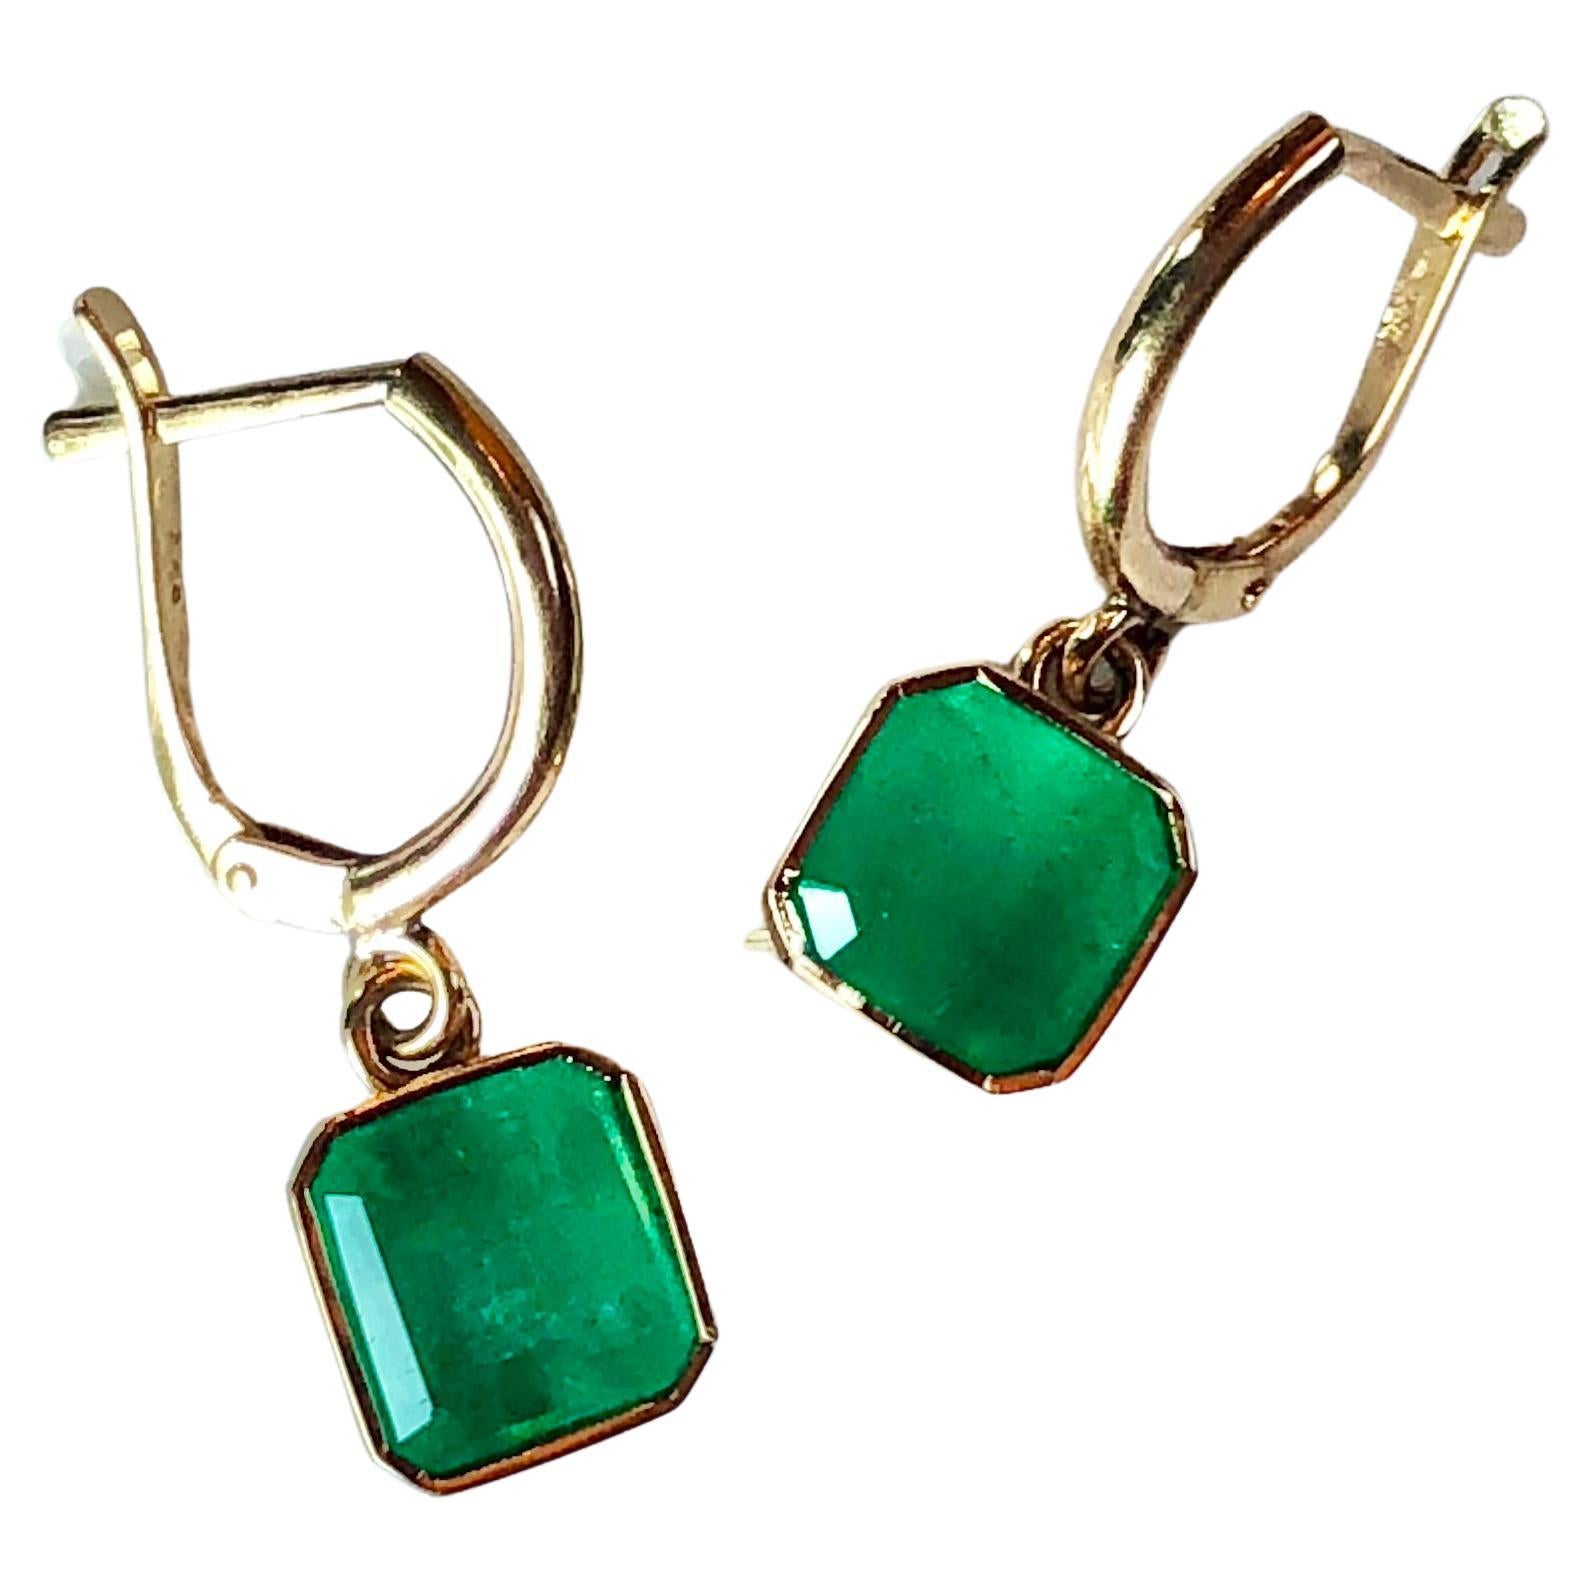 Emeralds Maravellous Drop 4.90 Carat Natural Colombian Emerald Earrings 18K